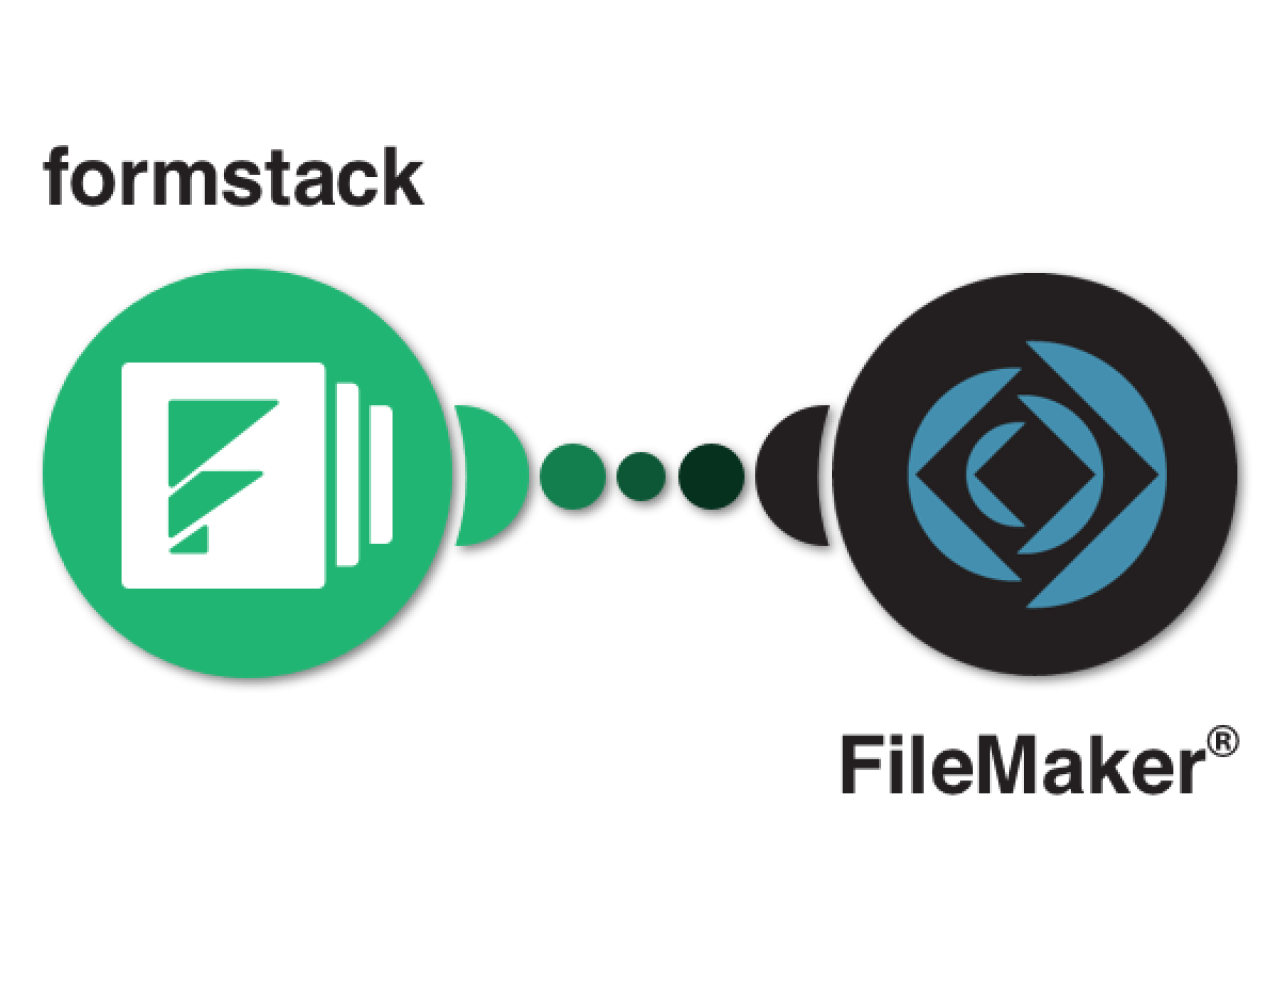 Formstack logo merging with FileMaker logo.